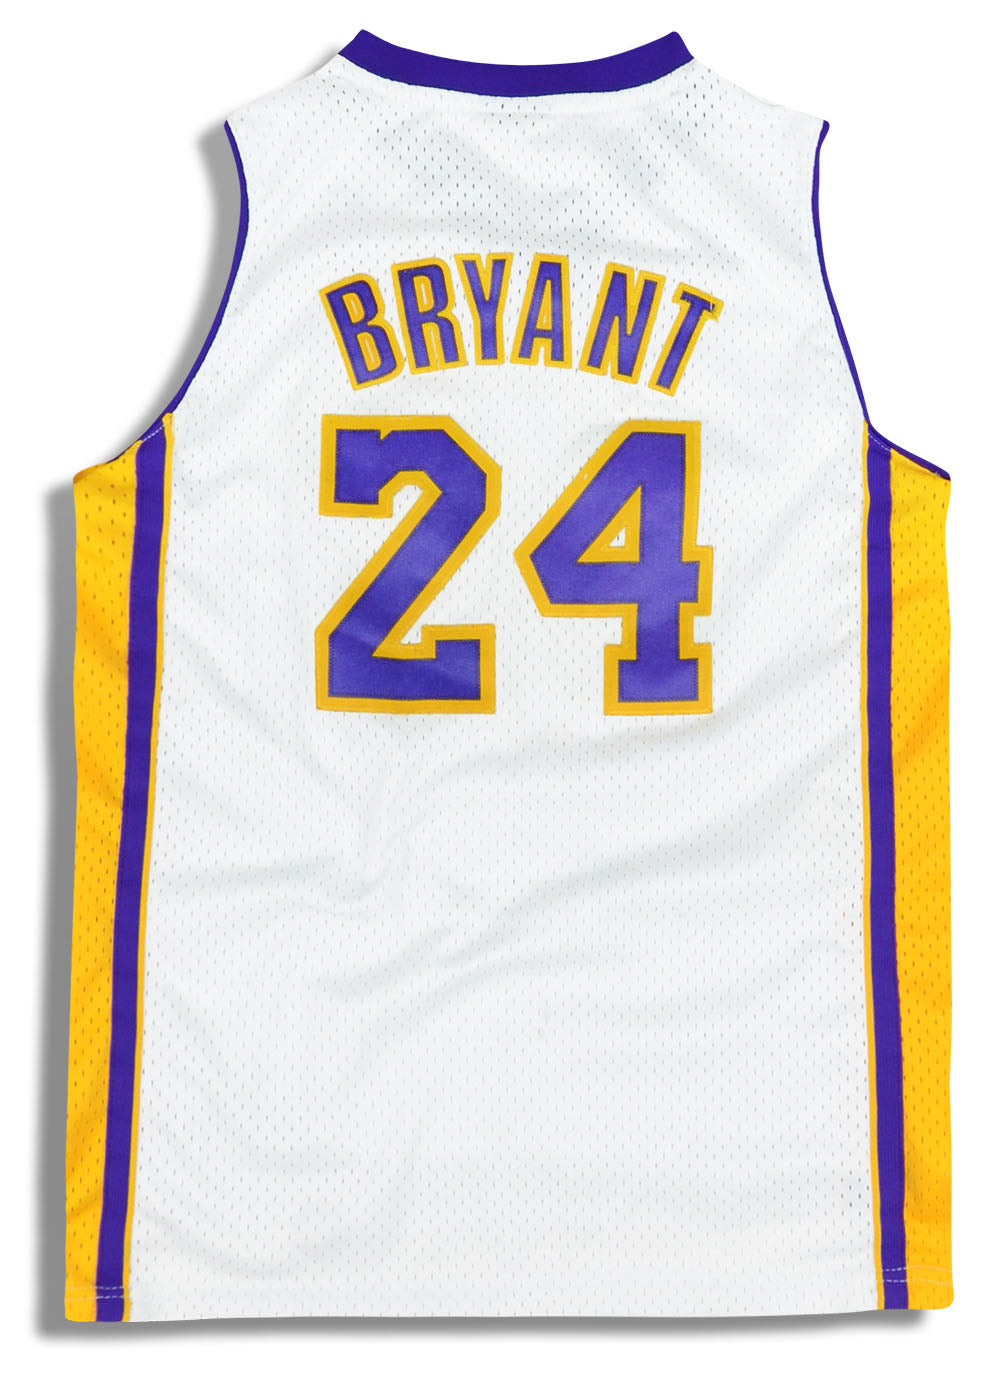 Kobe Bryant Jerseys for sale in San Antonio, Texas